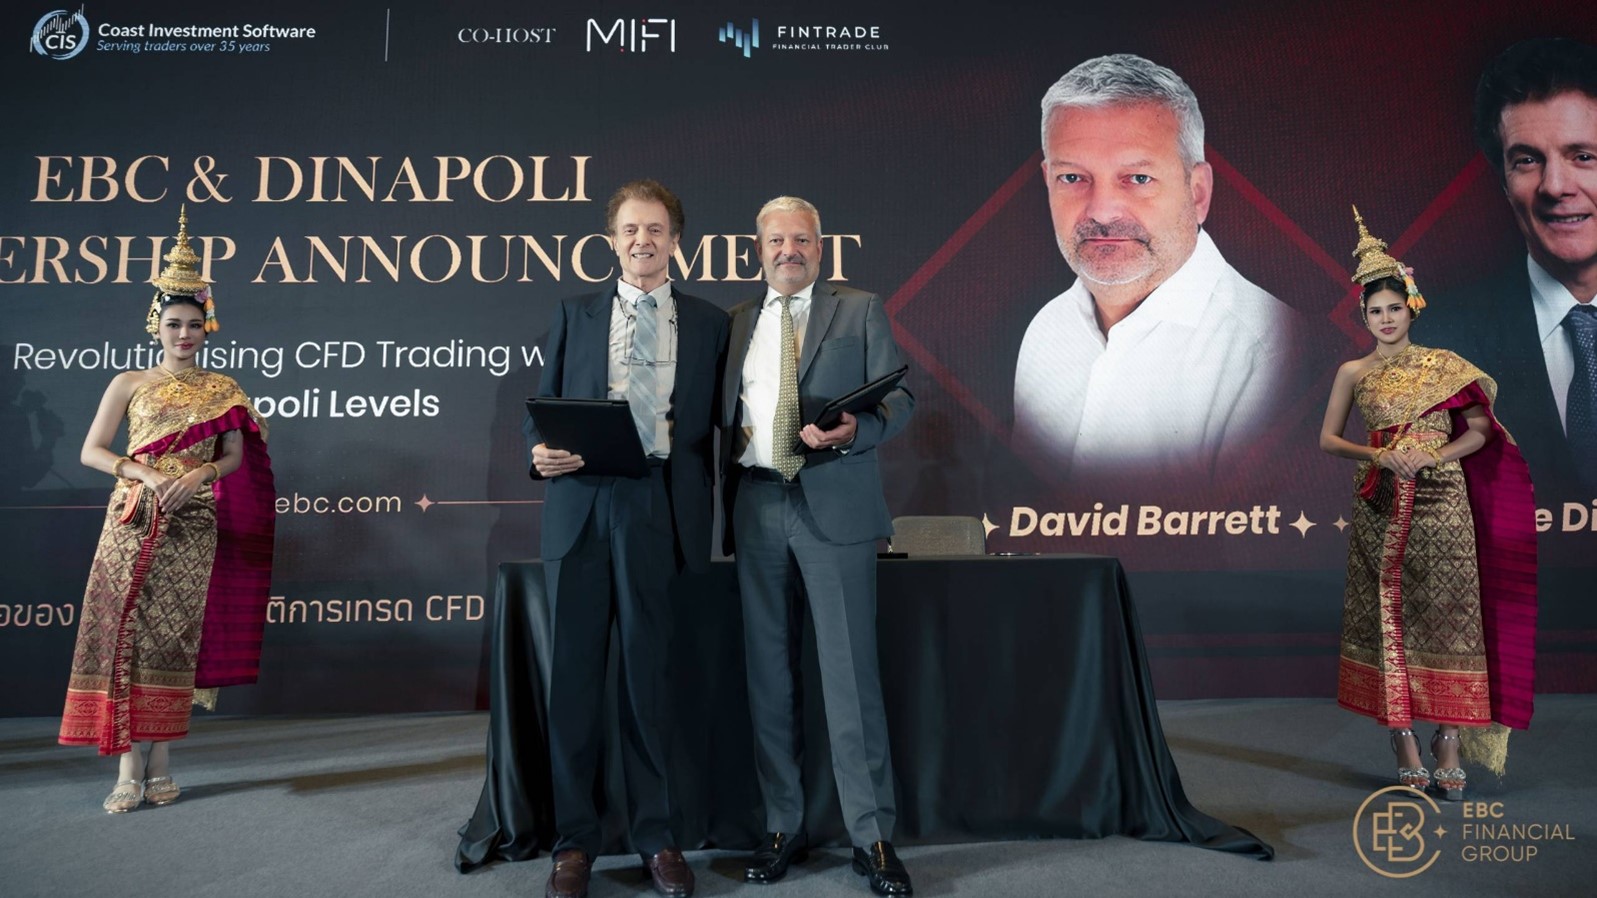 Signing and photo ceremony between Joe DiNapoli and David Barrett during EBC & DiNapoli Partnership Announcement